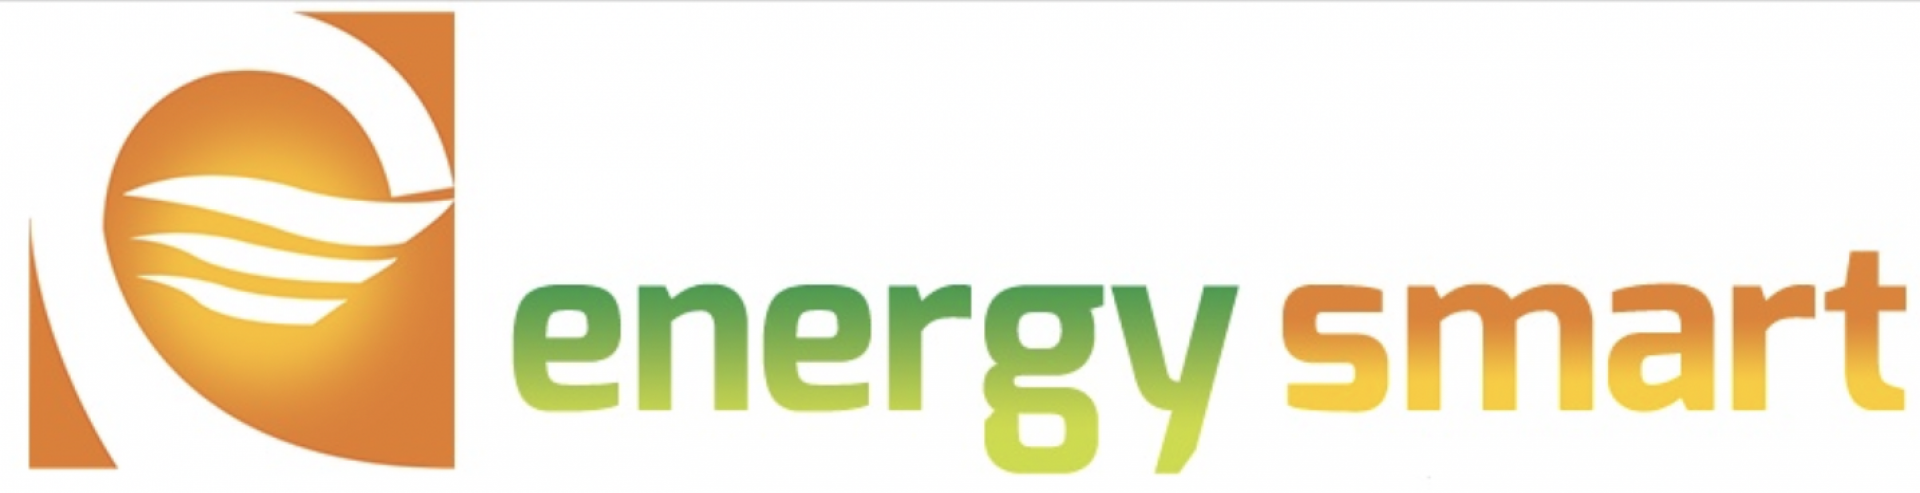 Energy Smart Engineering Inc company logo